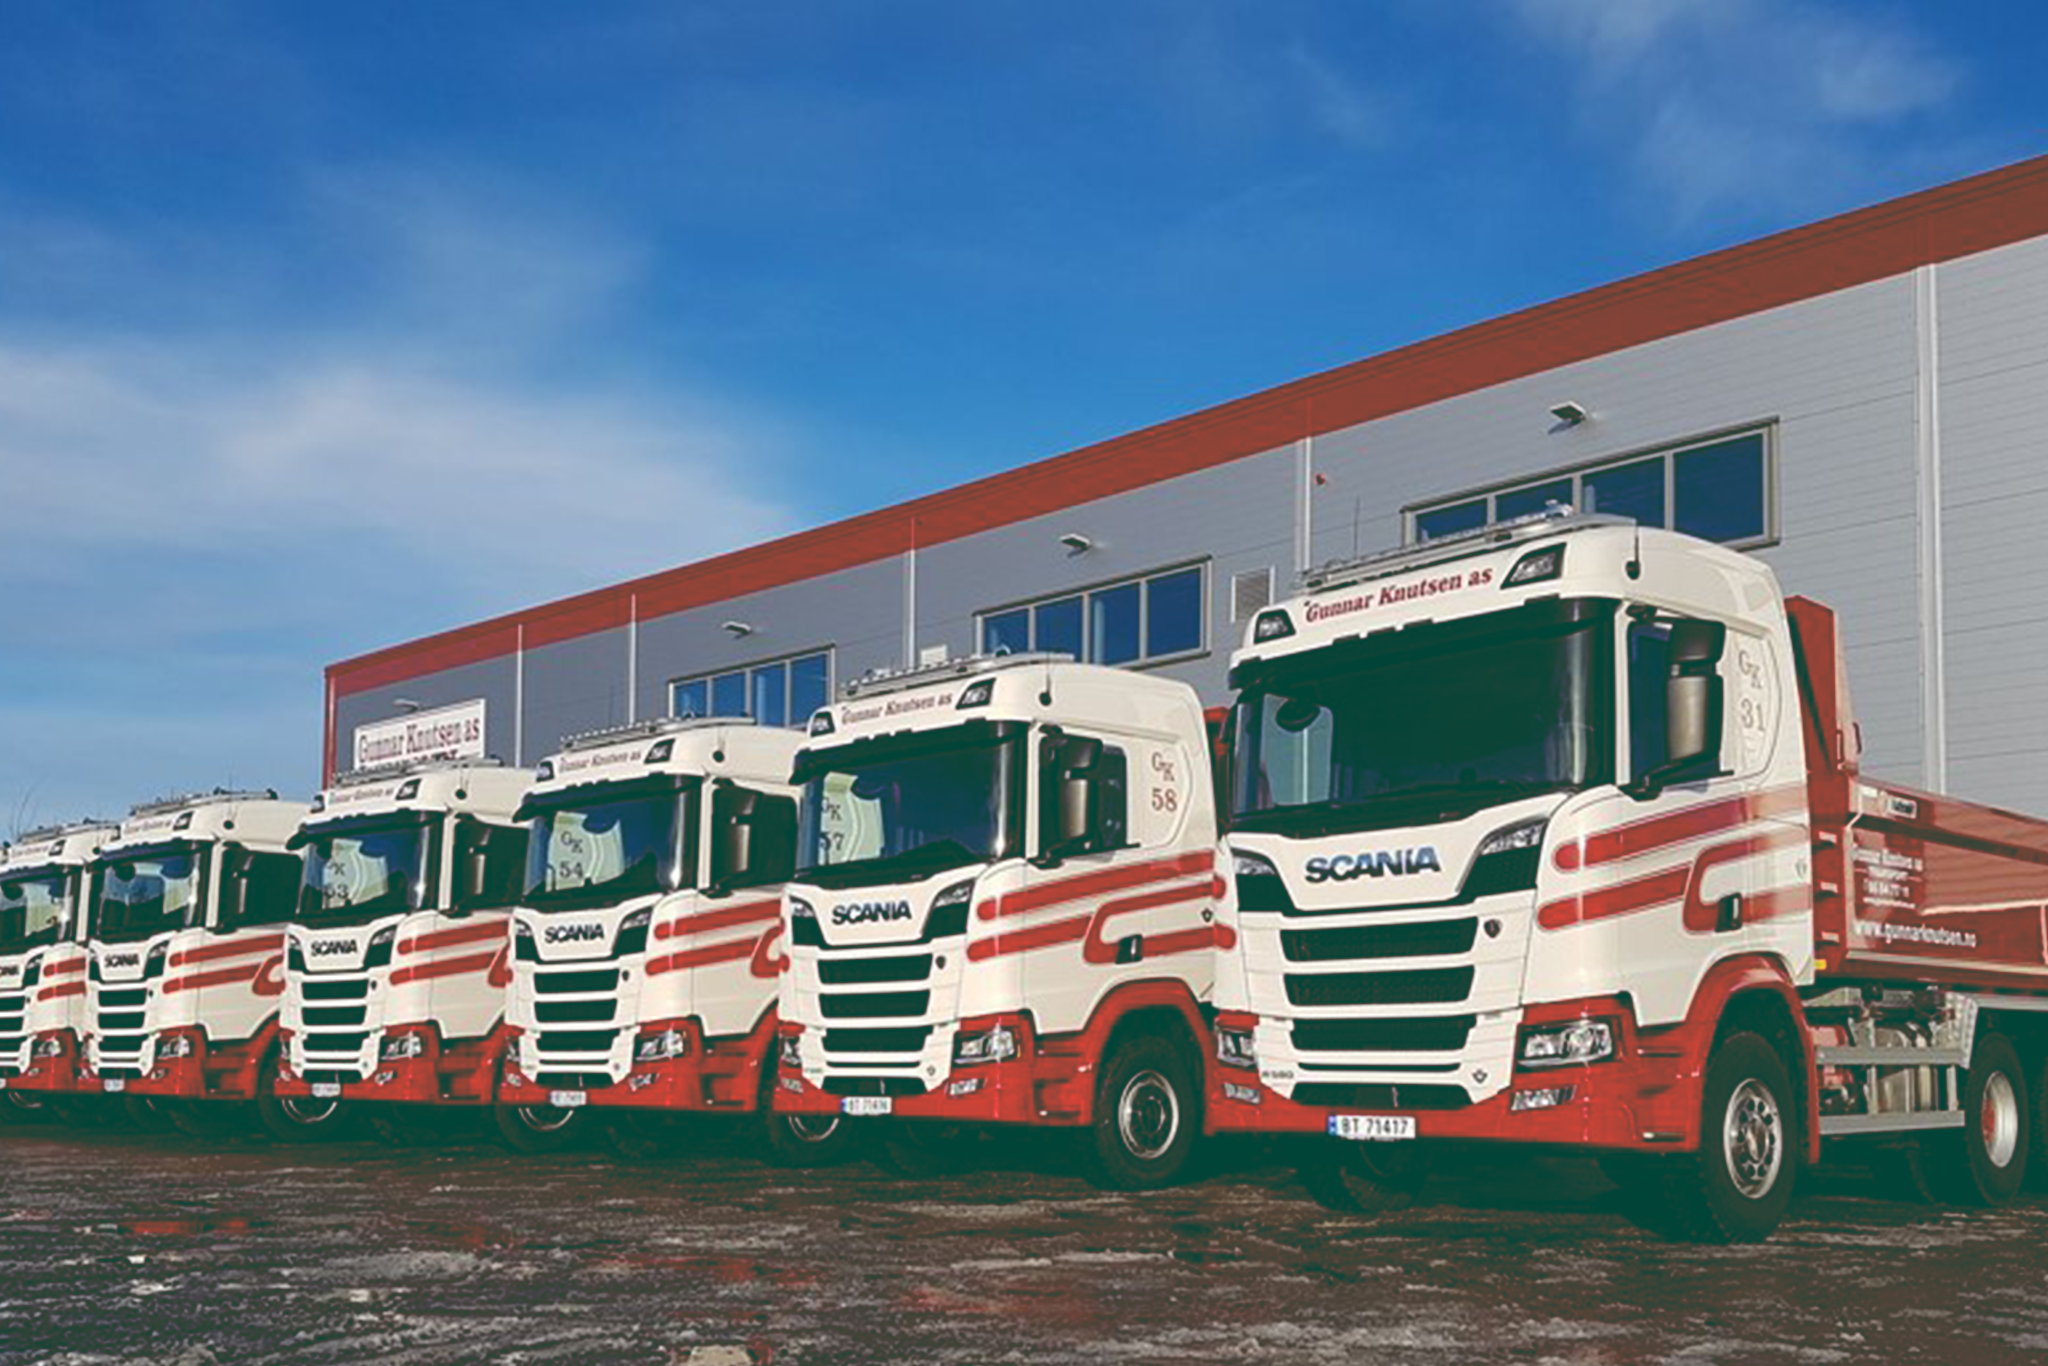 Six Gunnar Knudsen trucks parked next to each other